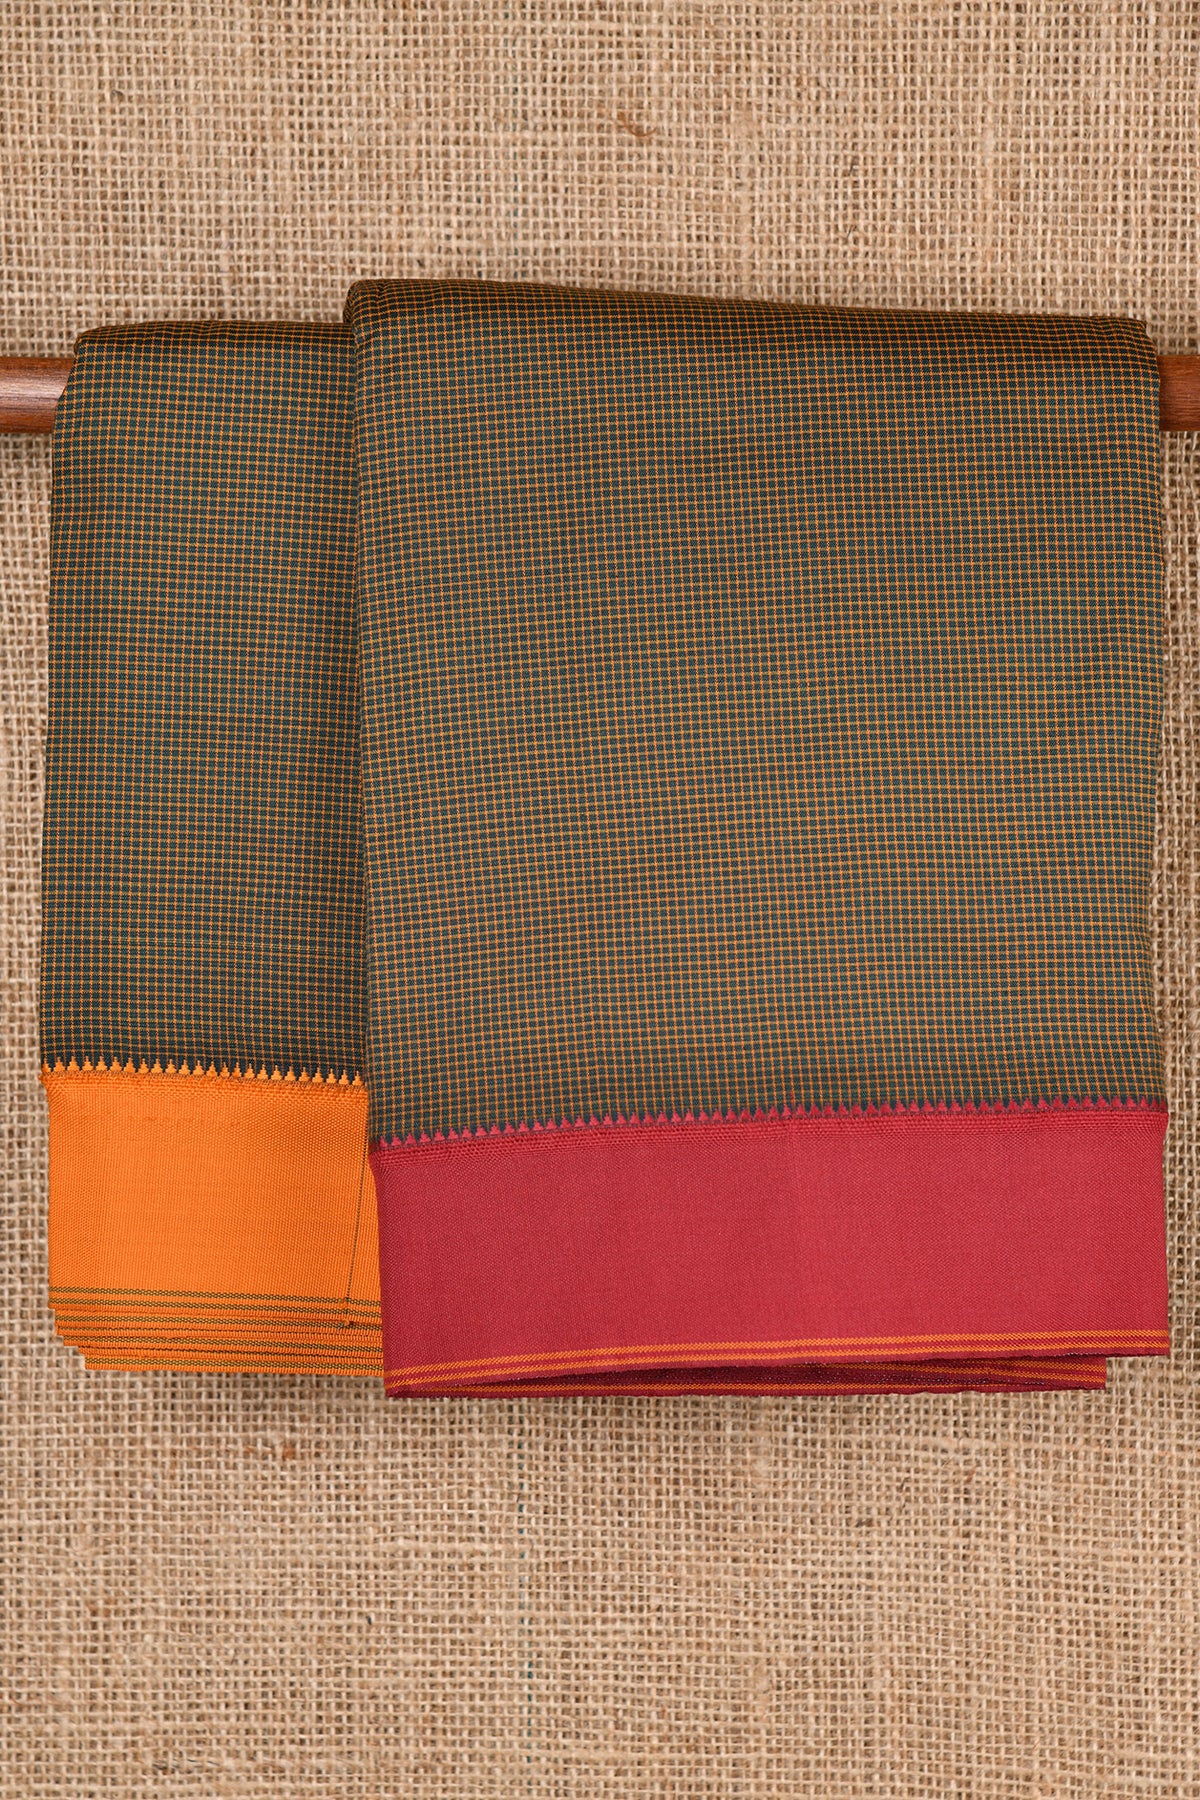 Checked Design Contrast Border Dark Green Dharwad Cotton Saree